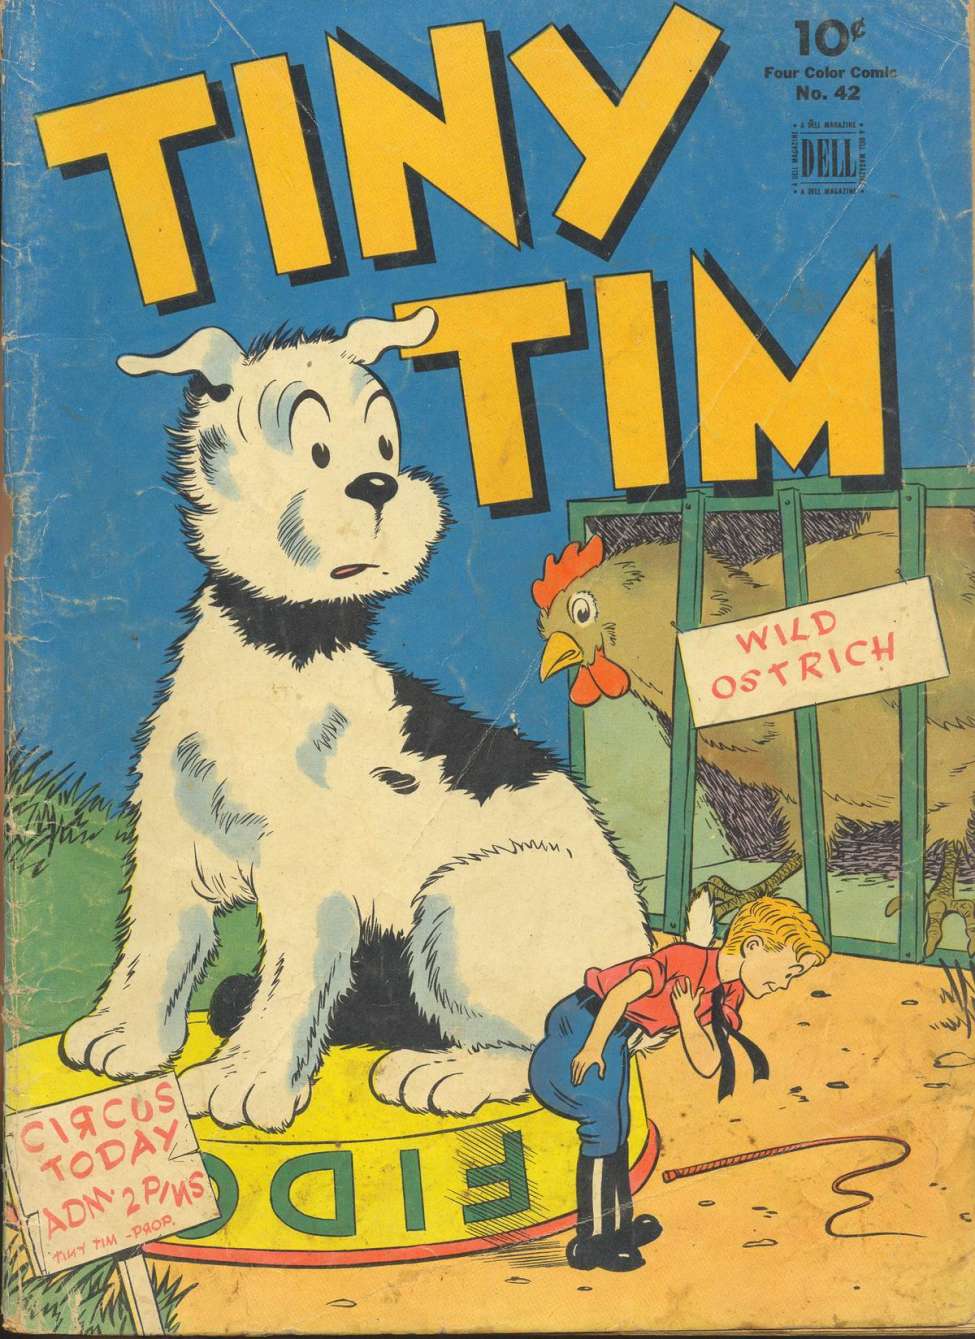 0042 - Tiny Tim (Dell Comics / Western Publishing)